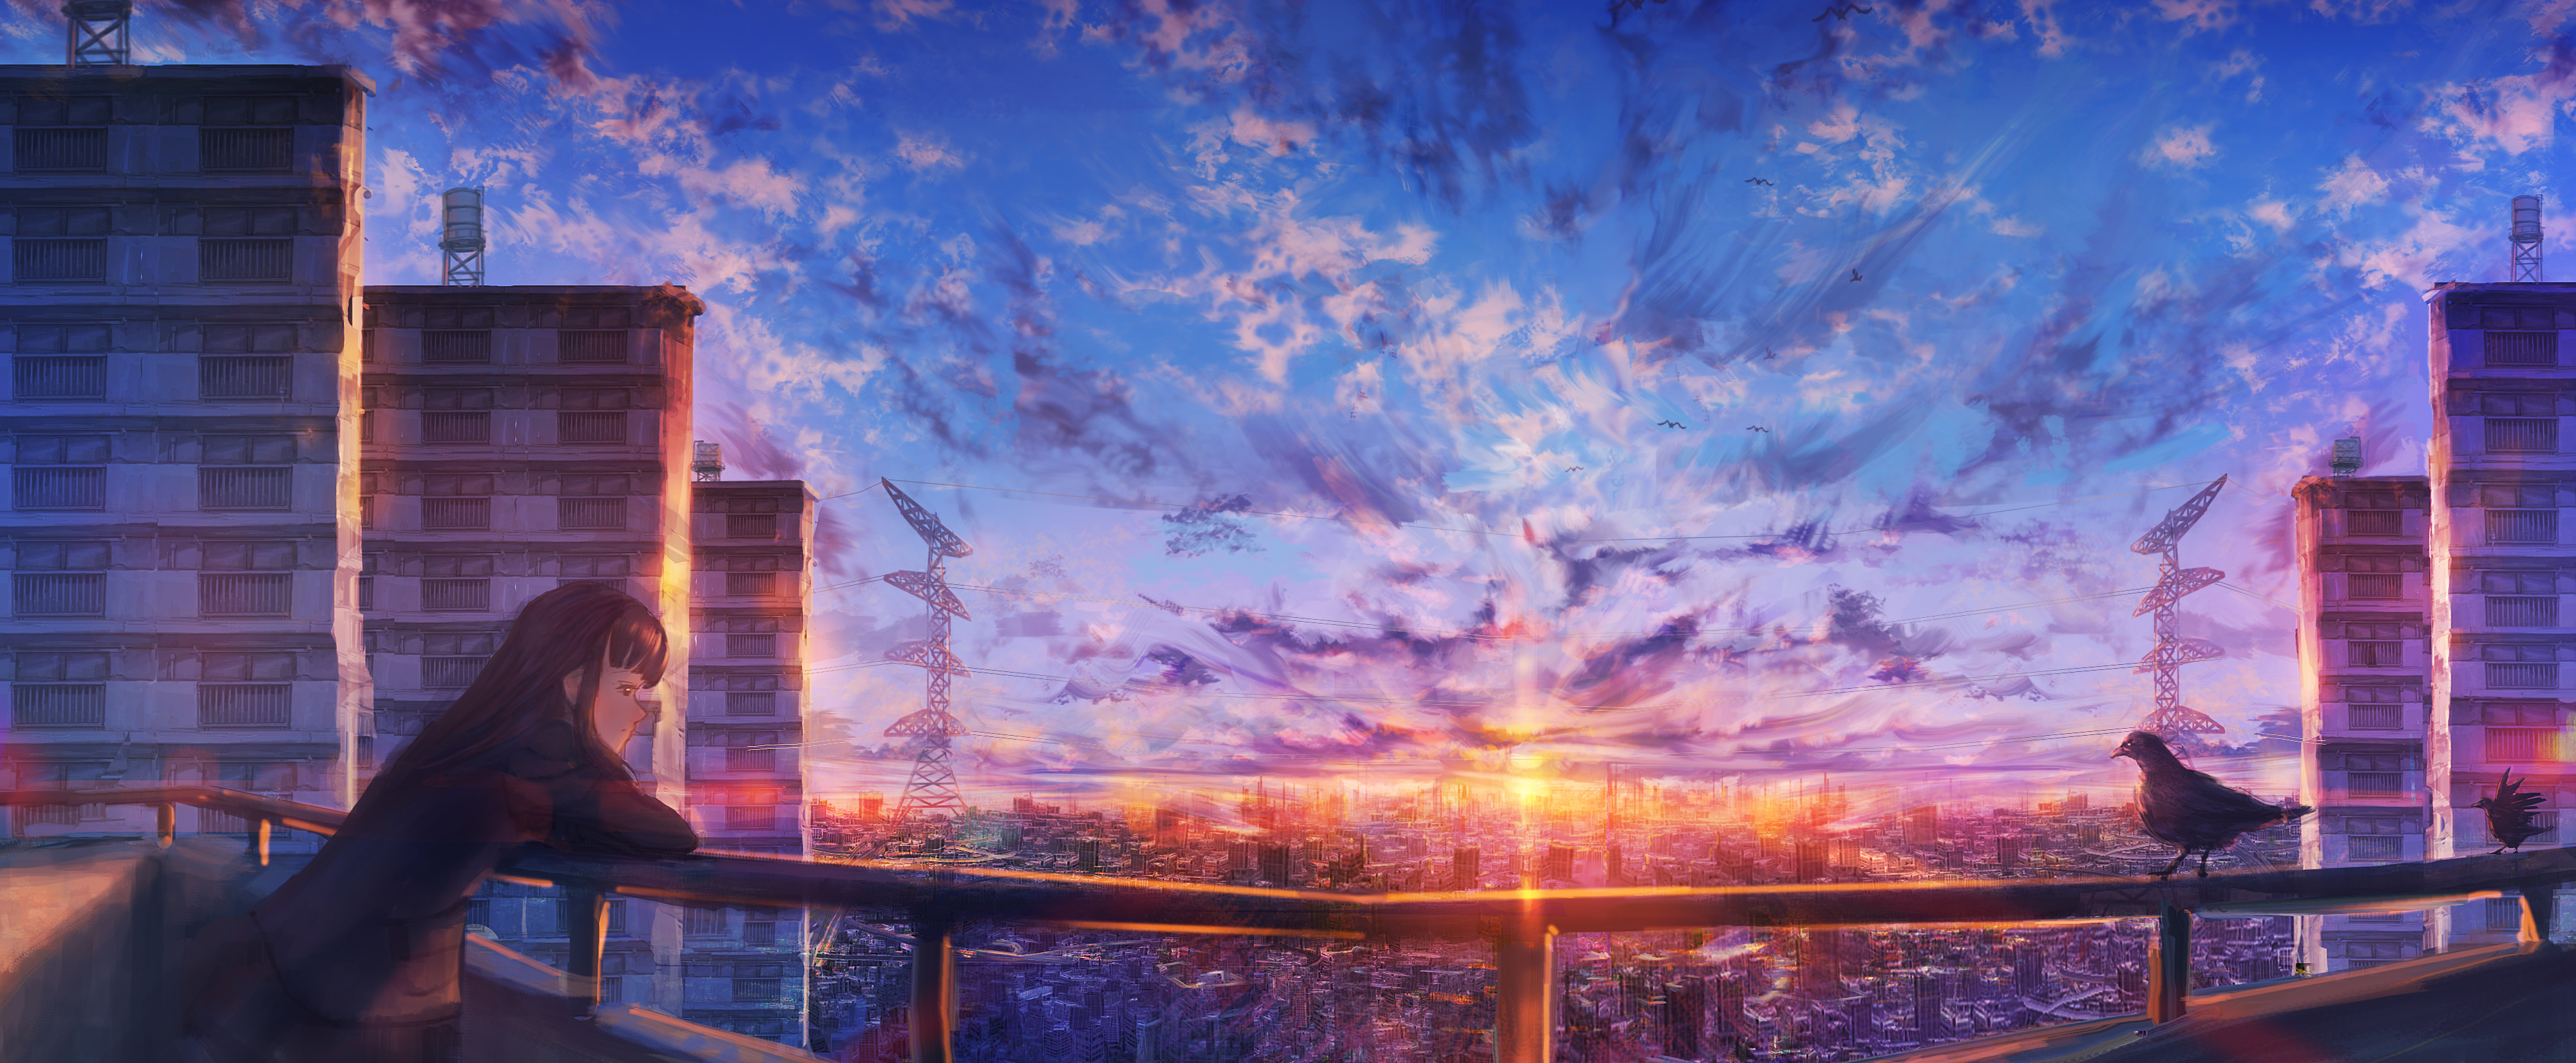 Moescape Sunset Sky Anime Girls Anime Birds Cityscape City Clouds 4000x1650